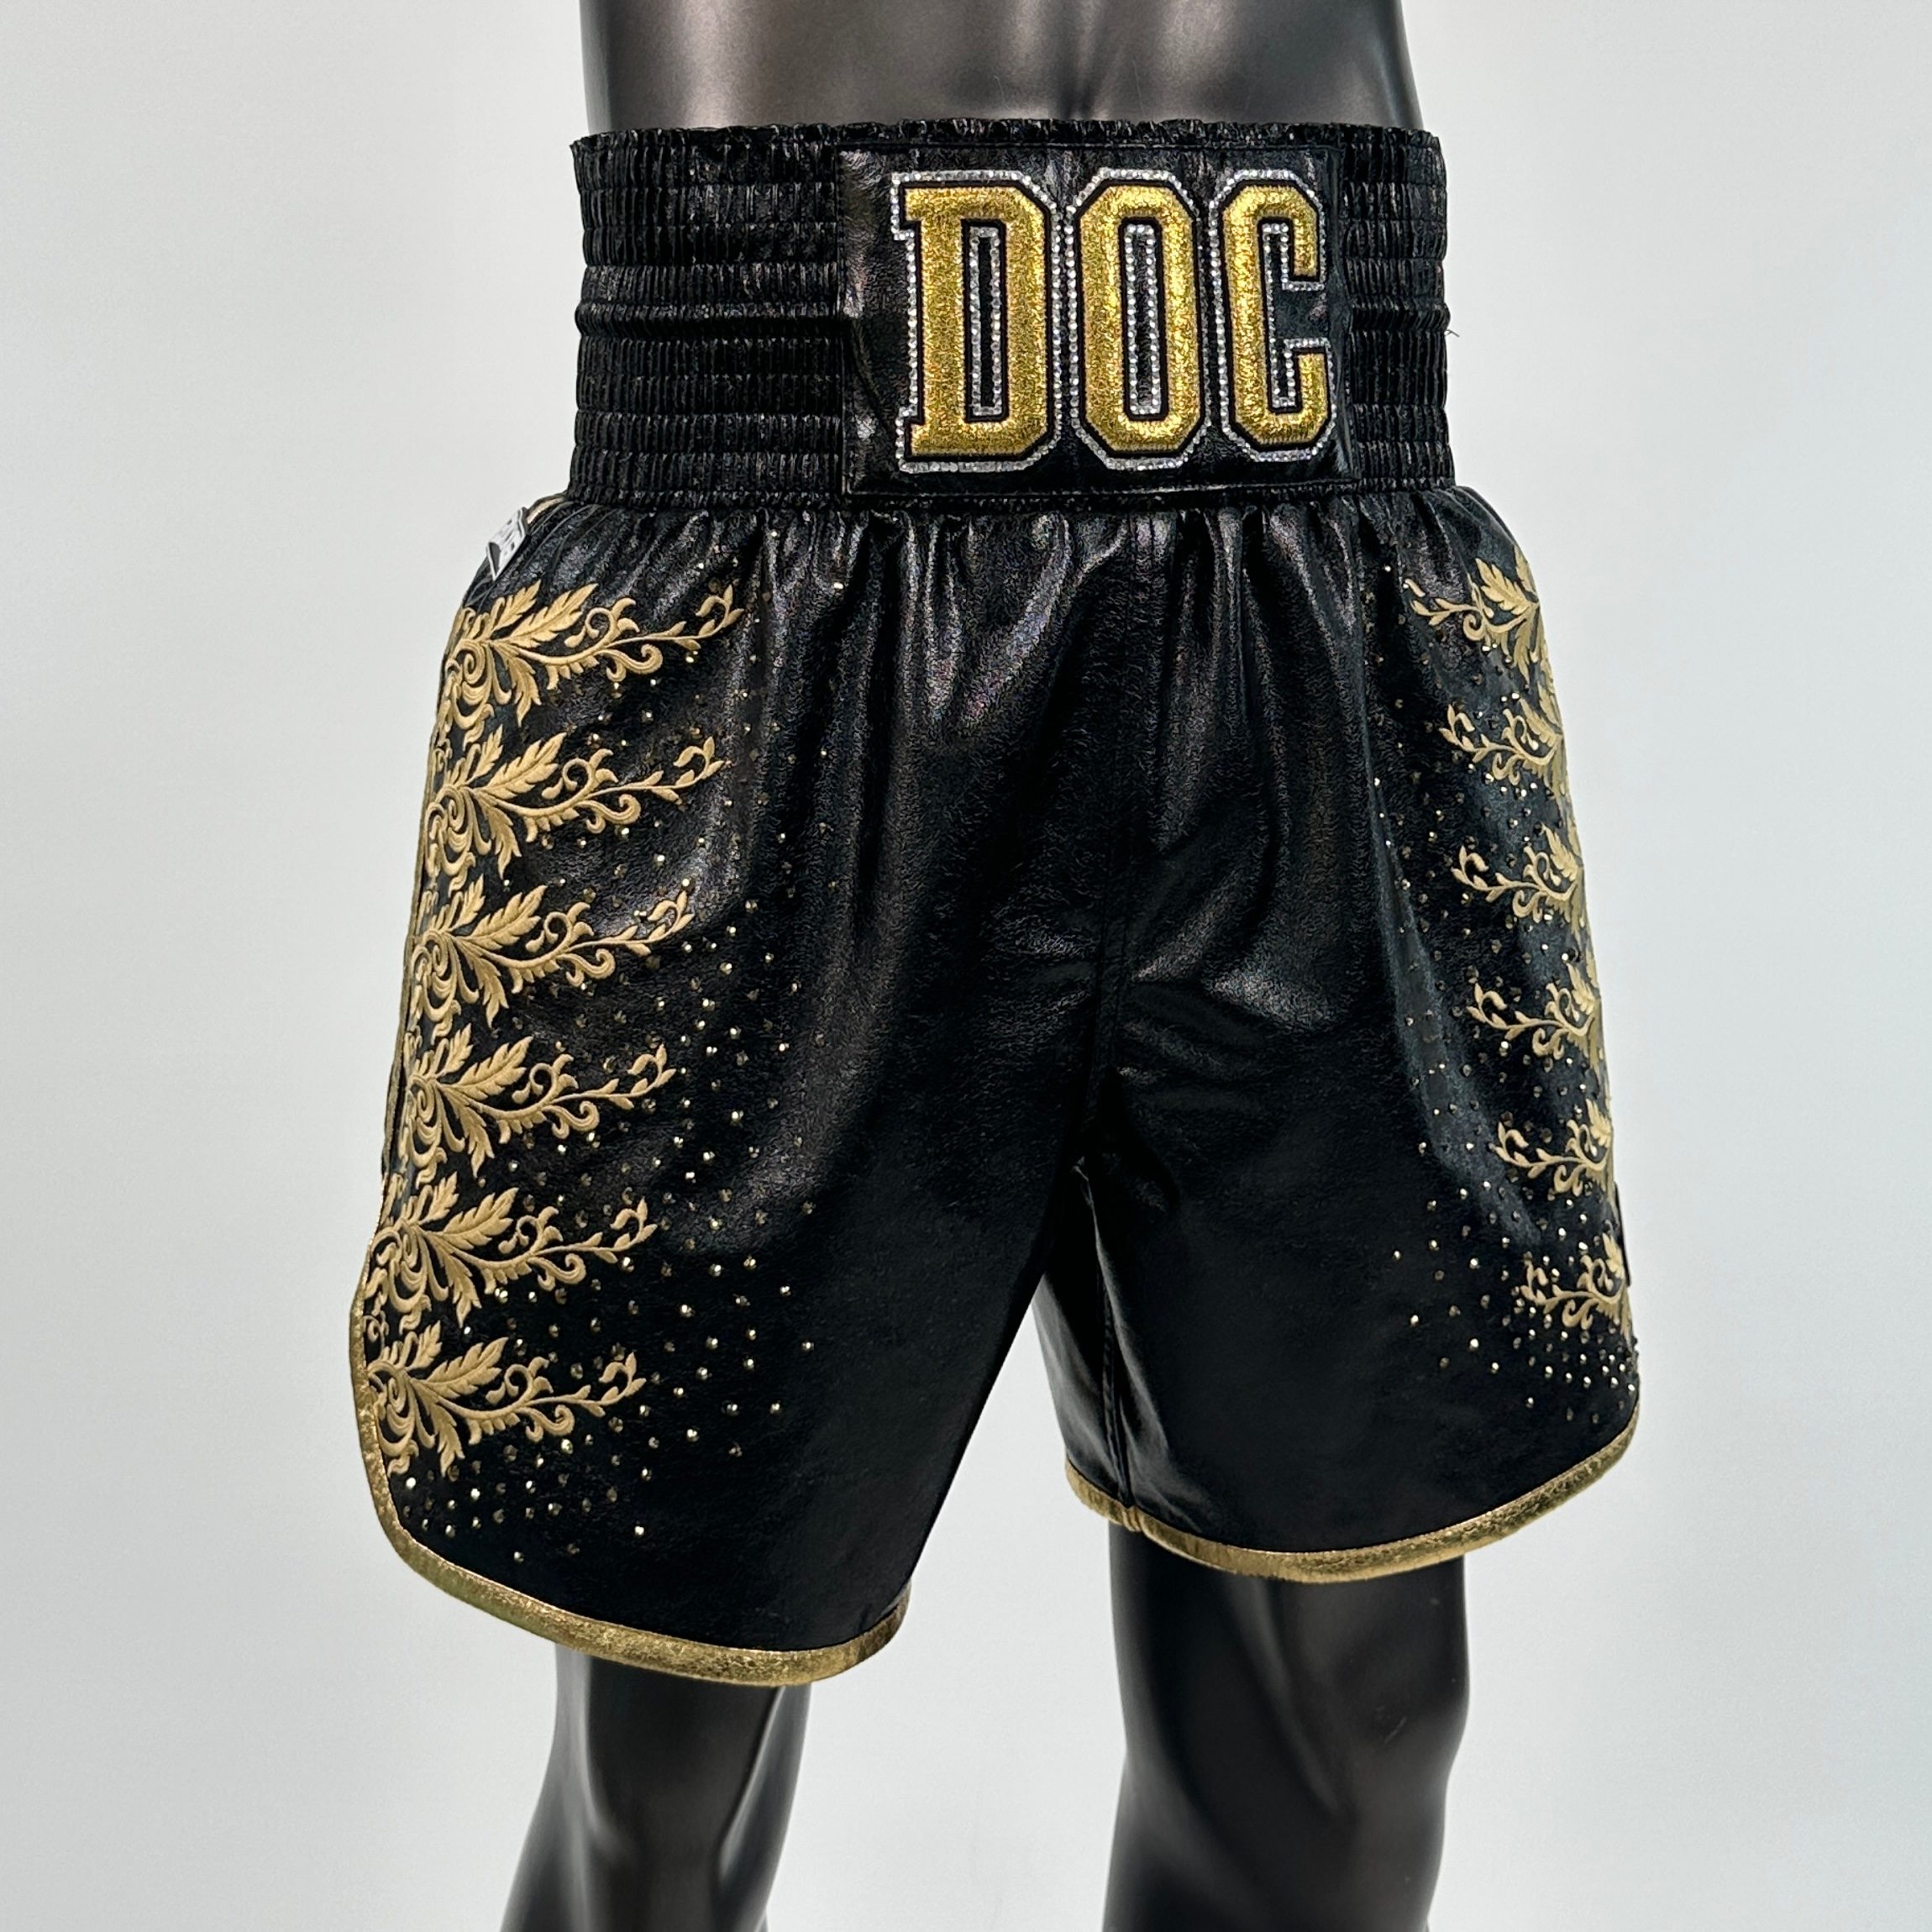 Boxing Shorts & Trunks | Gallery | Boxxerworld